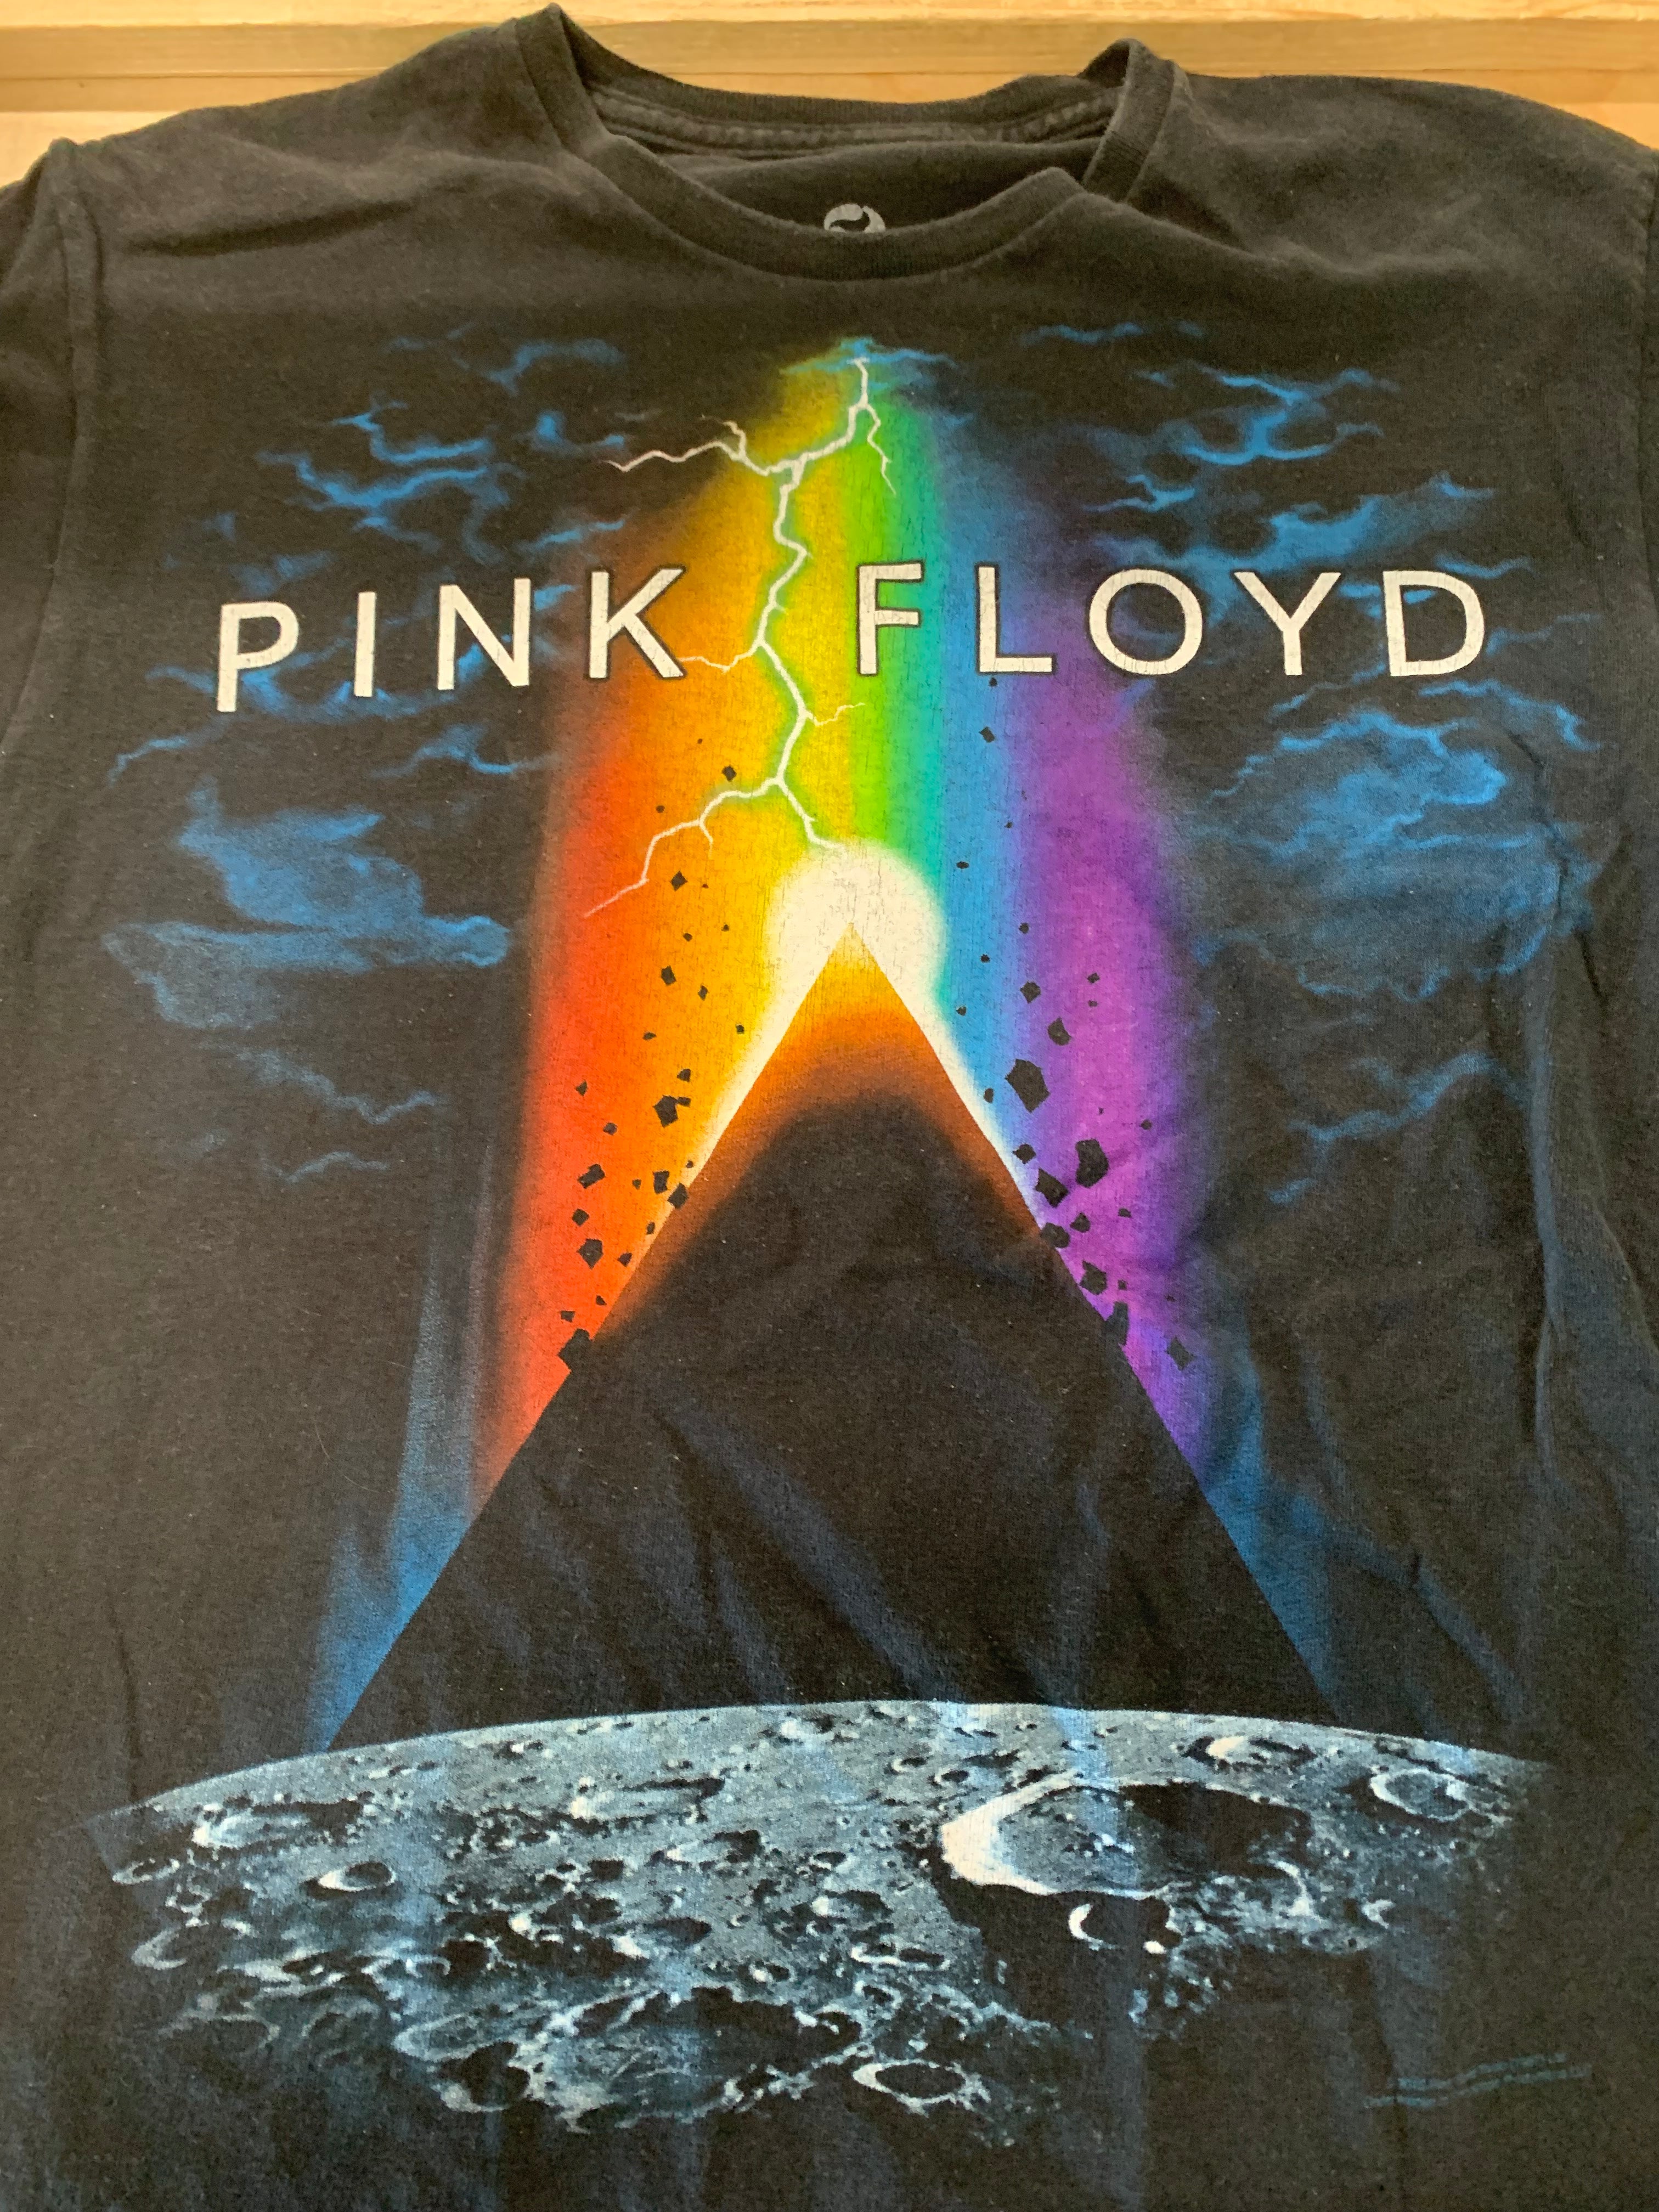 Pink Floyd Darkside Pyramid T-Shirt, Black, M